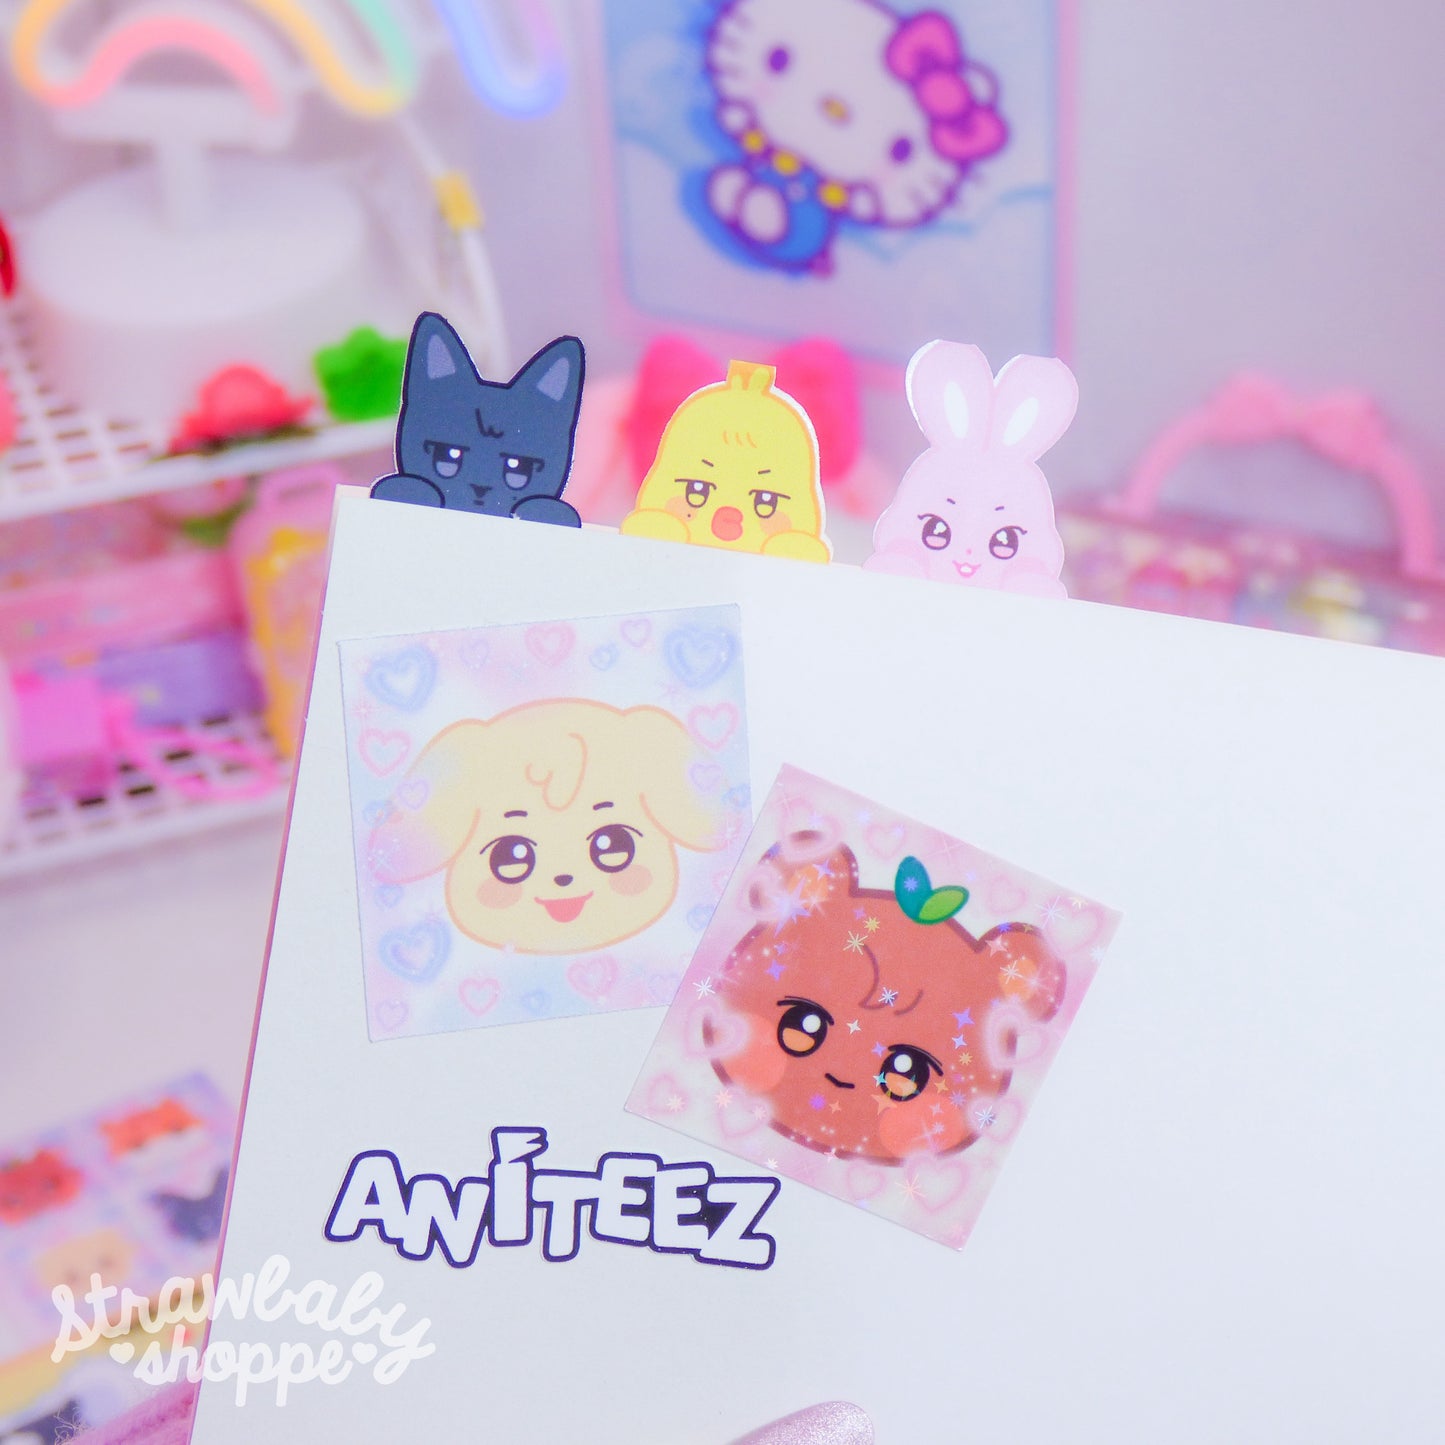 ANITEEZ Kpop Stickers